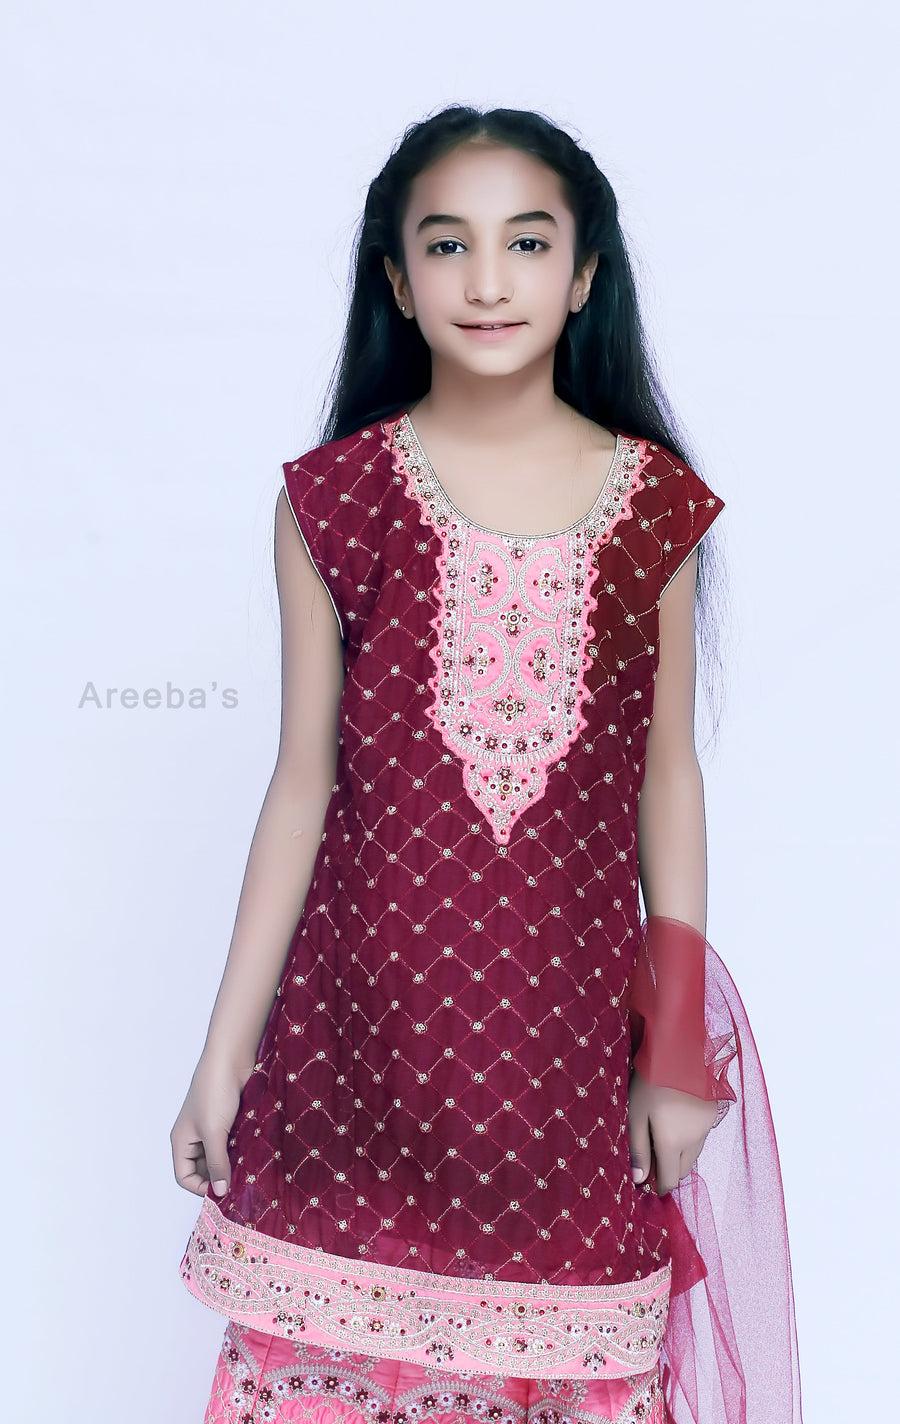 Girls BC20- Areeba's Couture